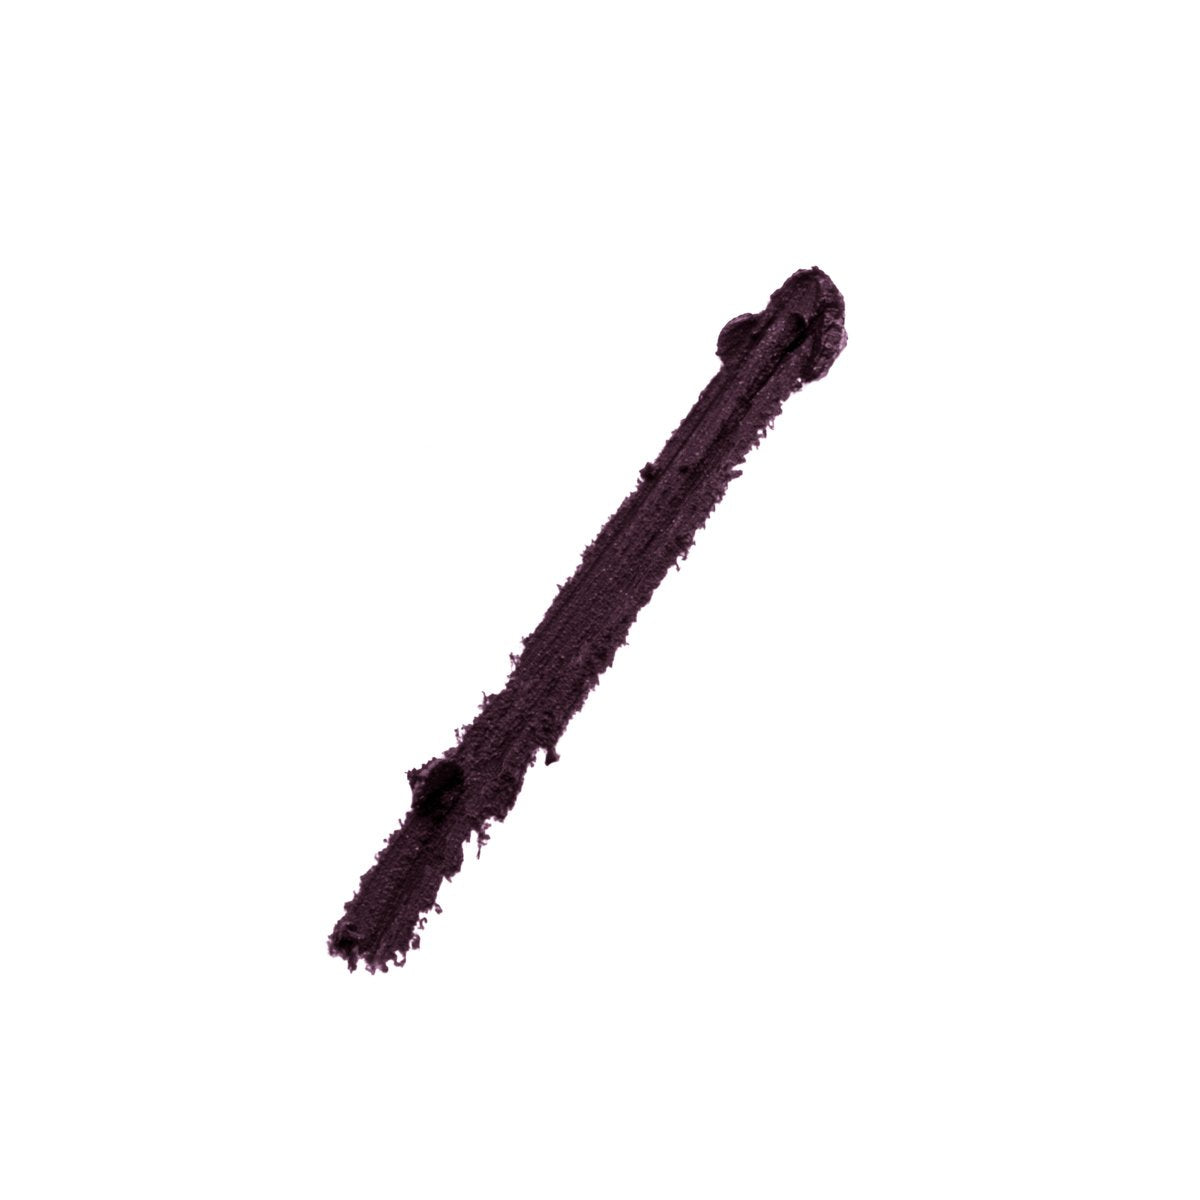 VAPEUR MAUVE - PURPLE - swatch of smoky mauve eye pencil